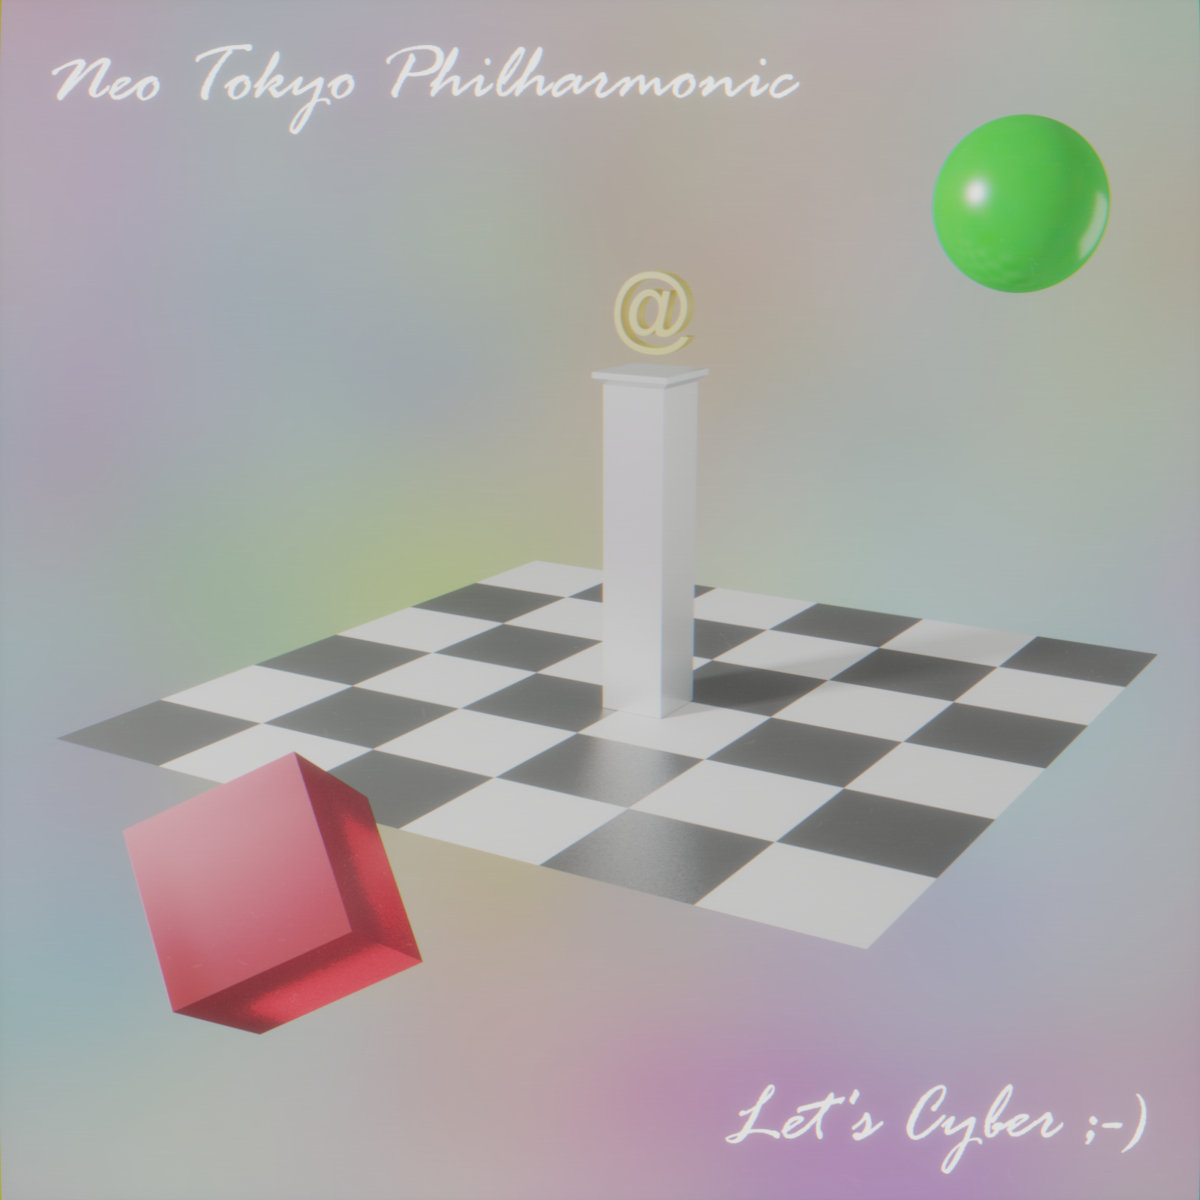 Let's Cyber ;-)  Neo Tokyo Philharmonic